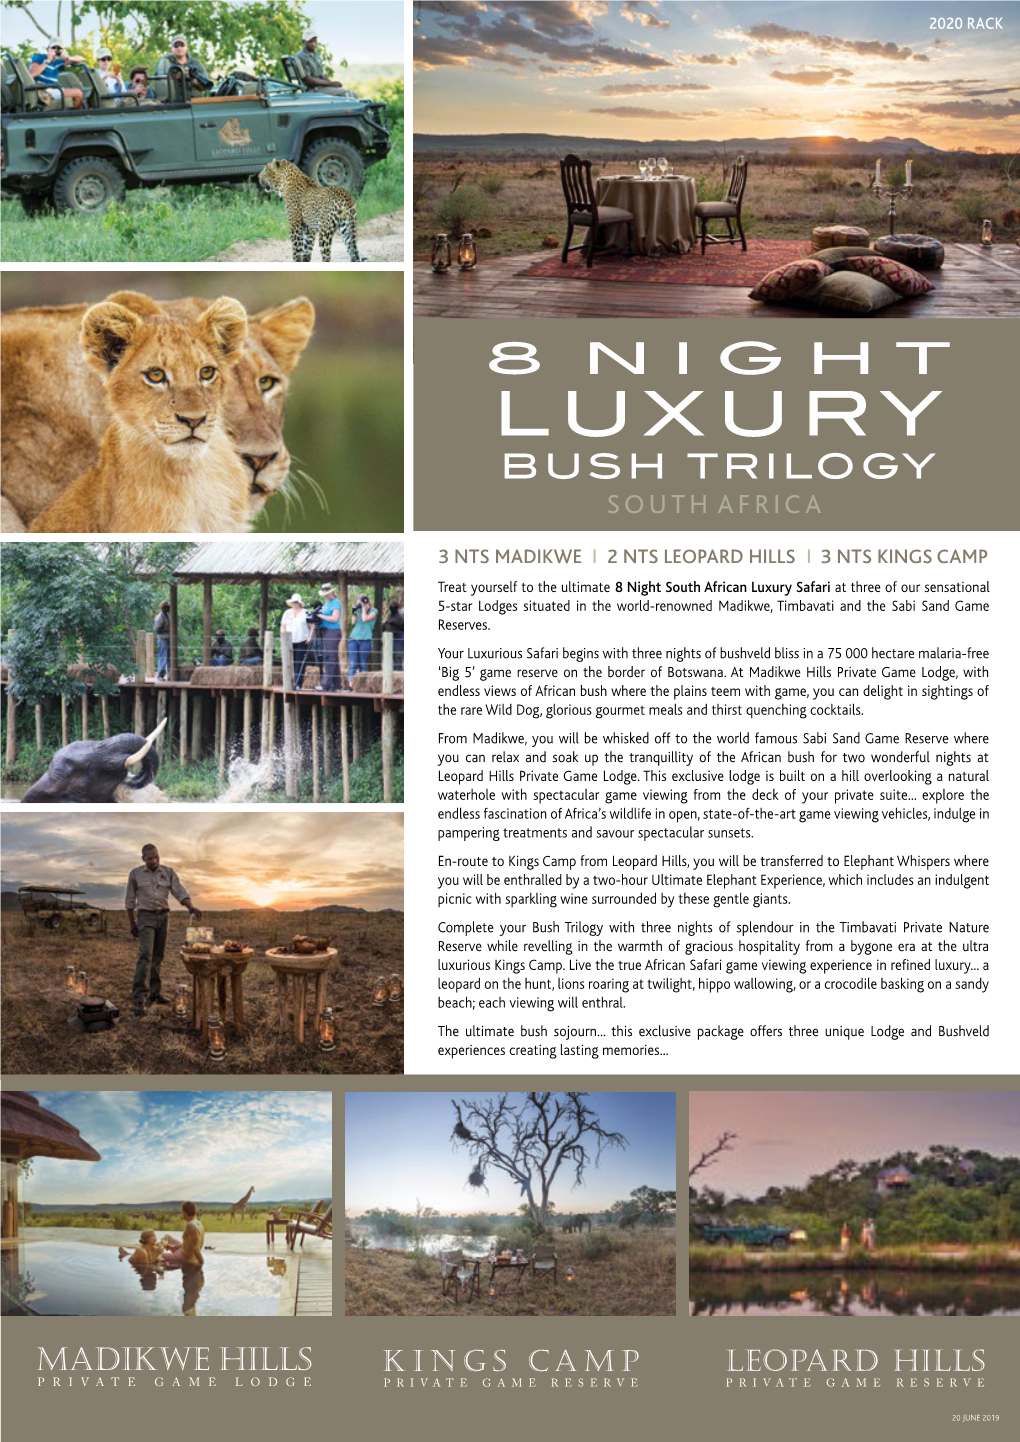 Luxury Bush Trilogy South Africa